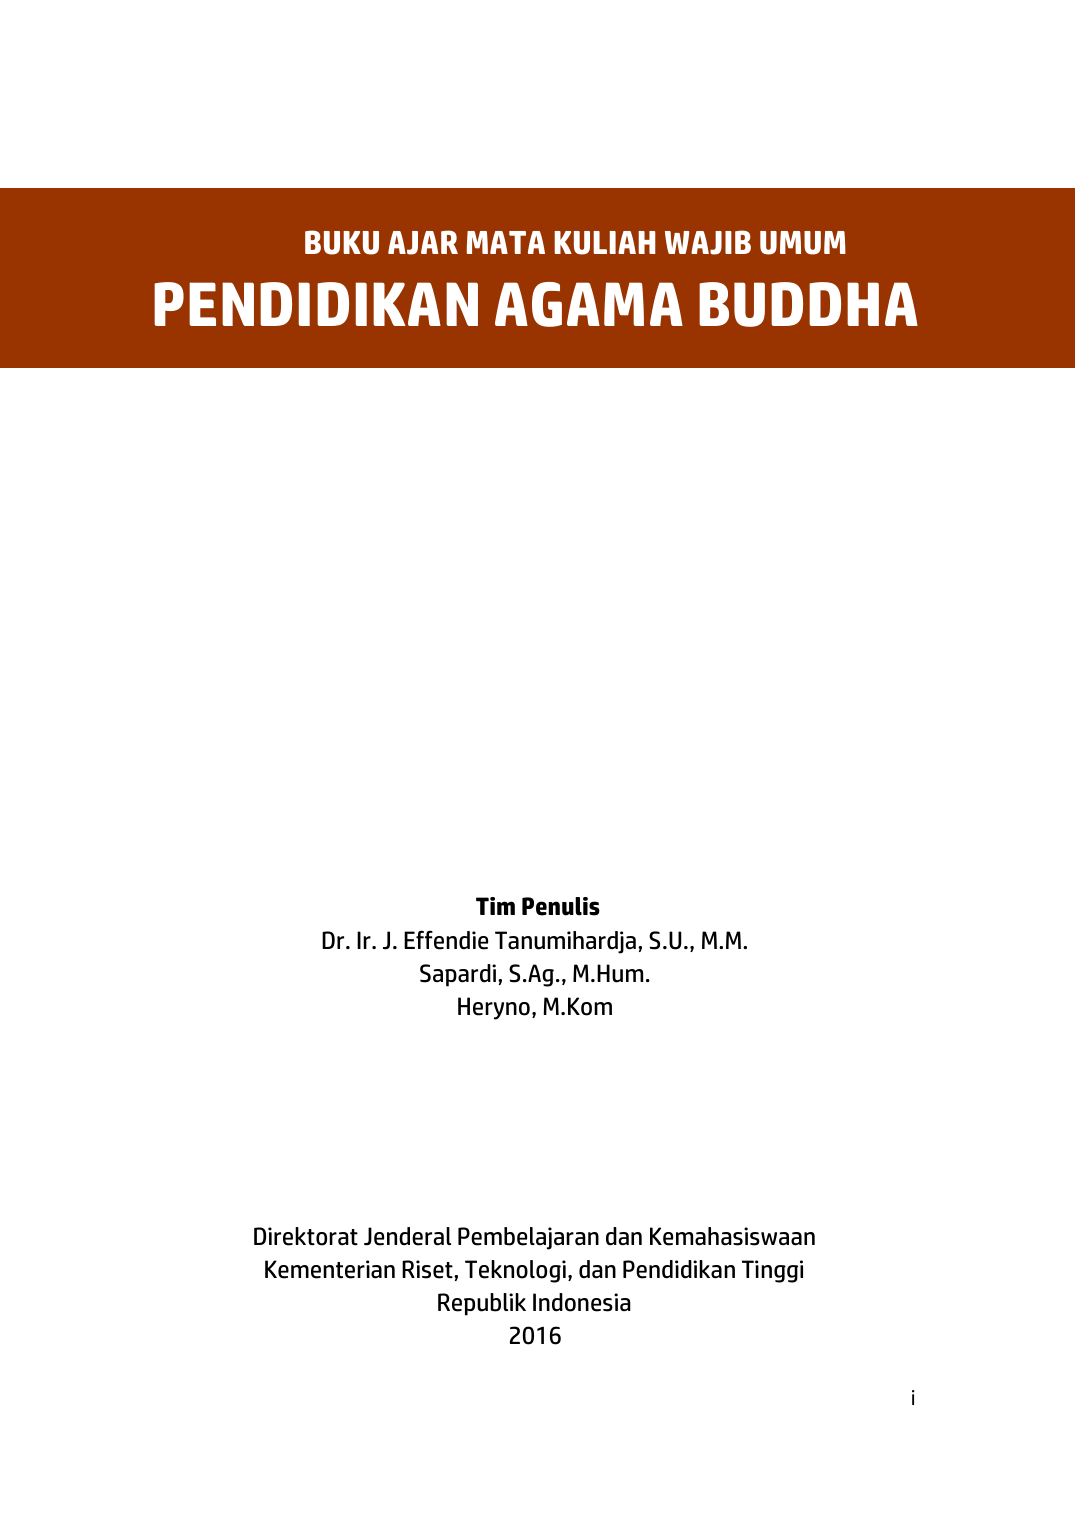 Pendidikan Agama Buddha